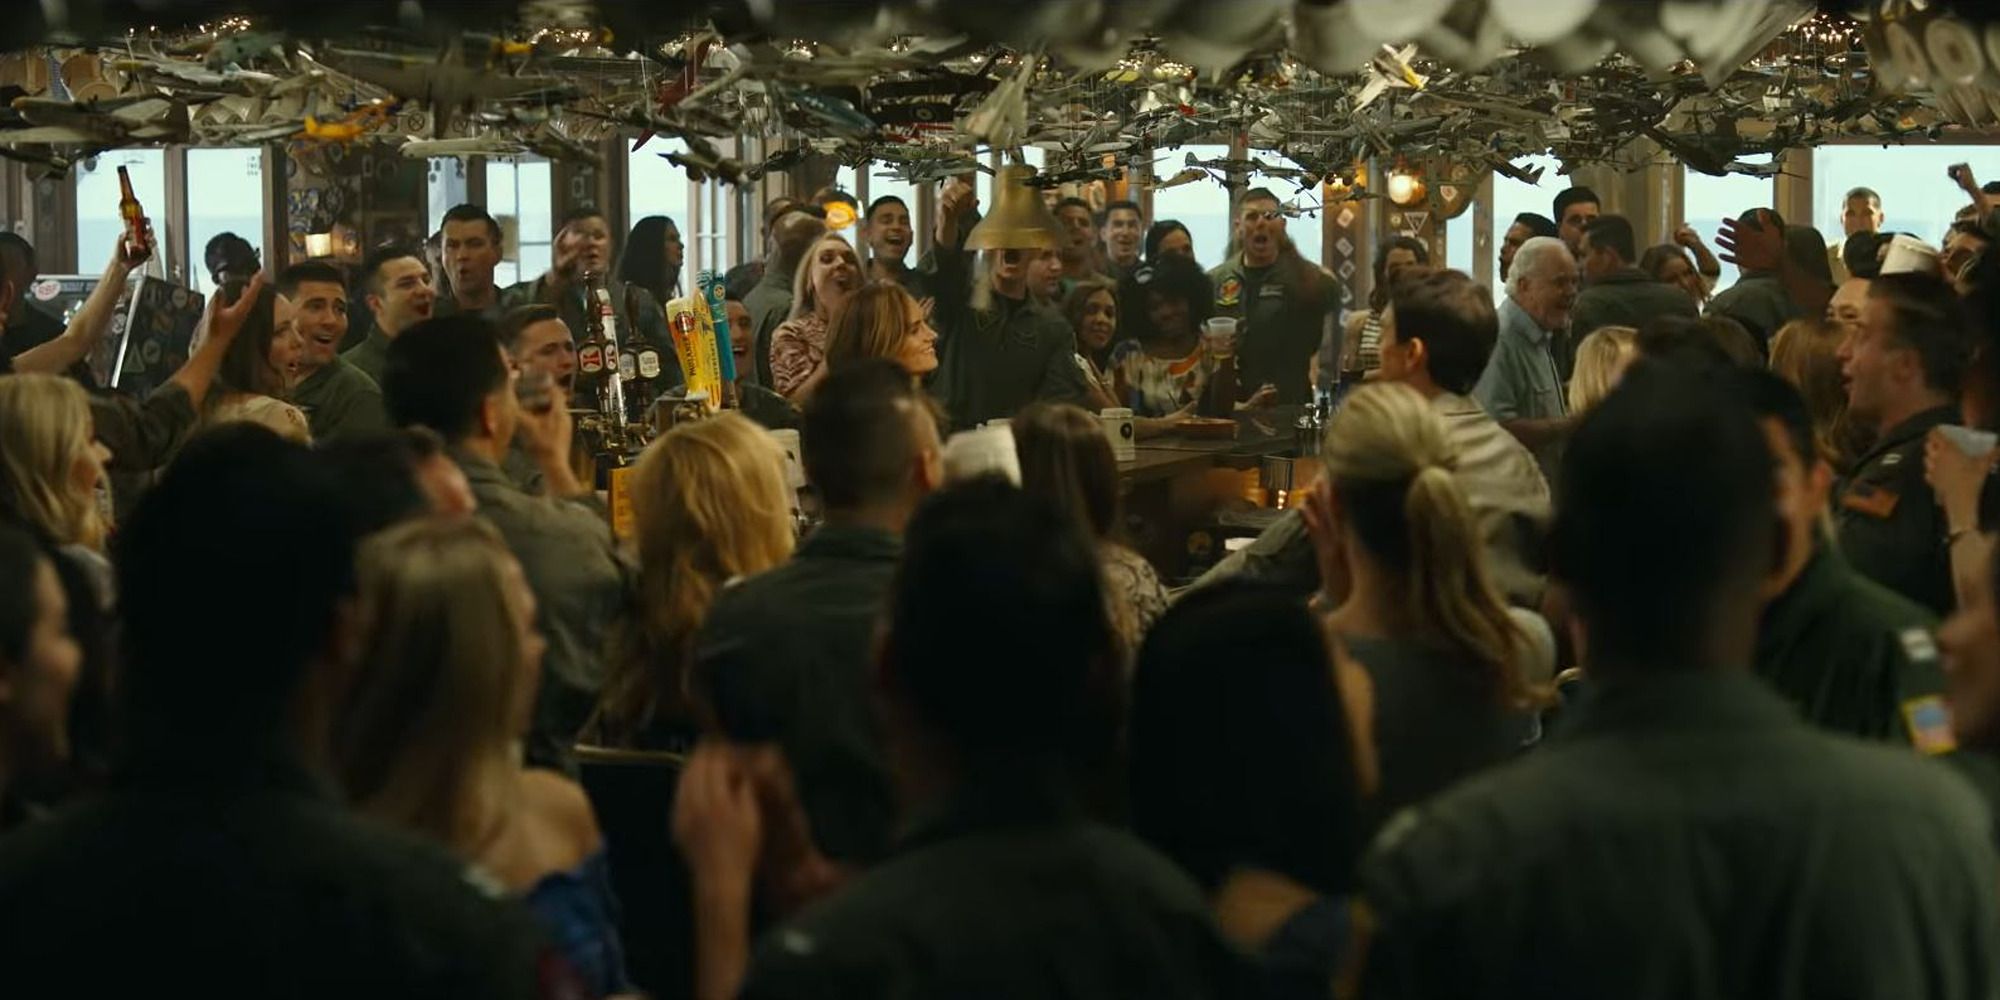 A crowd gathered around the bar in Top Gun: Maverick